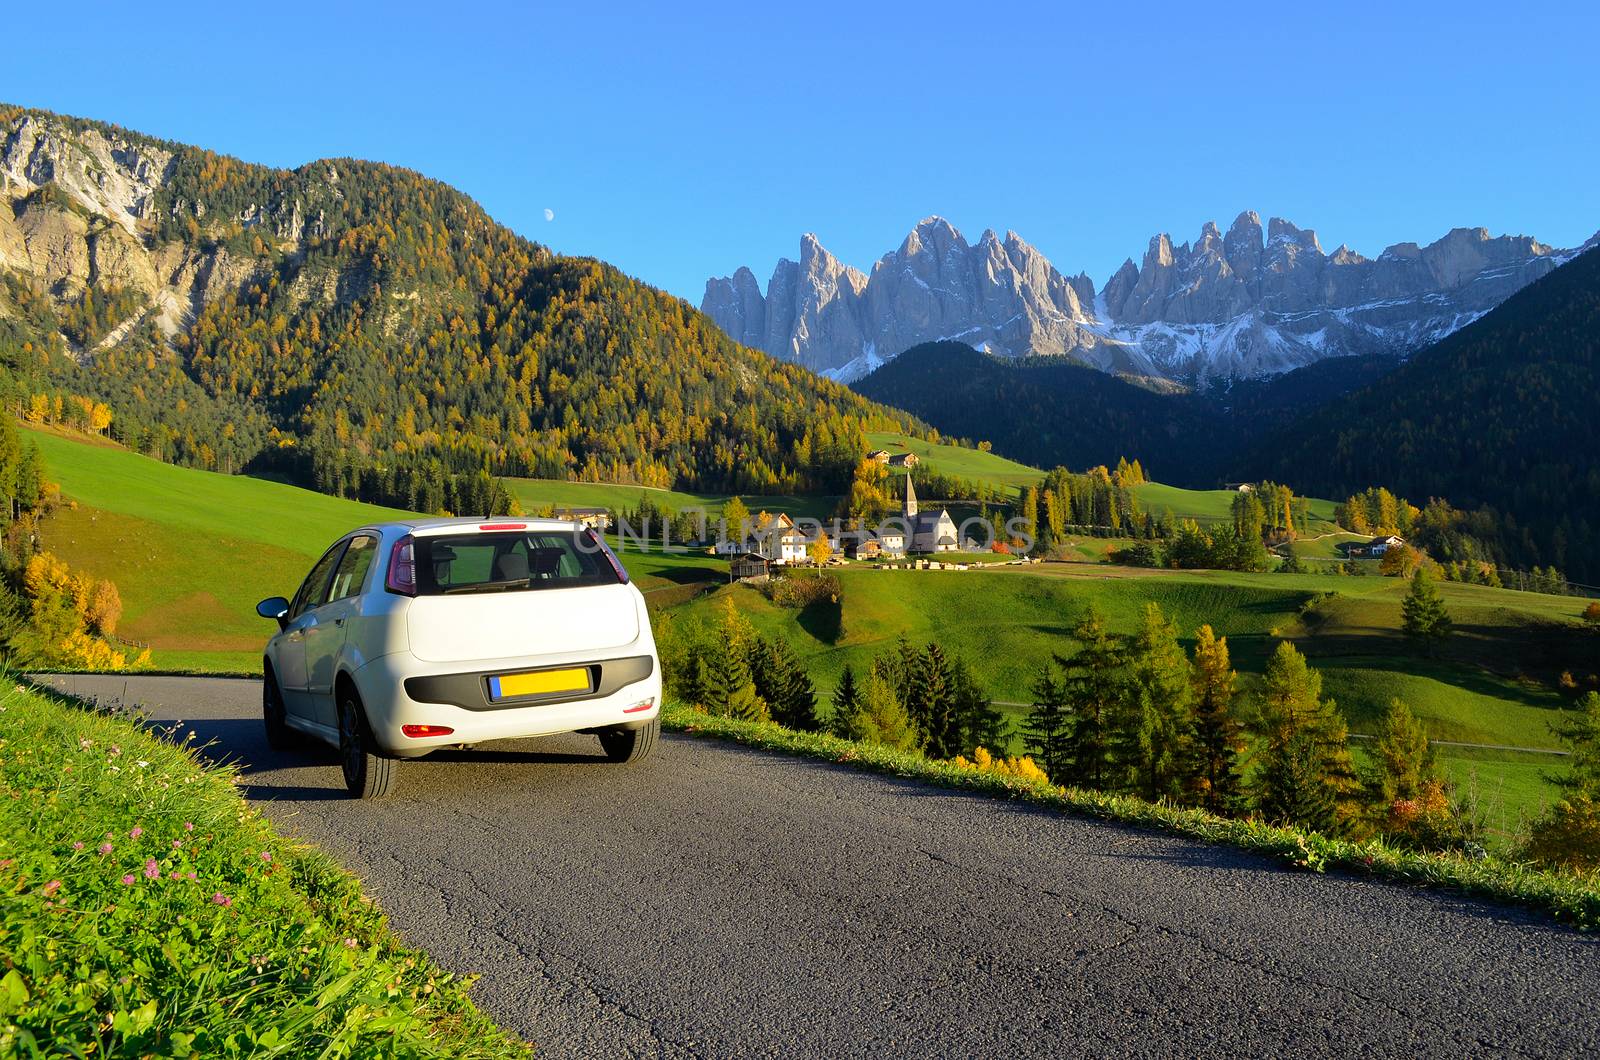 Dolomites road trip by pljvv